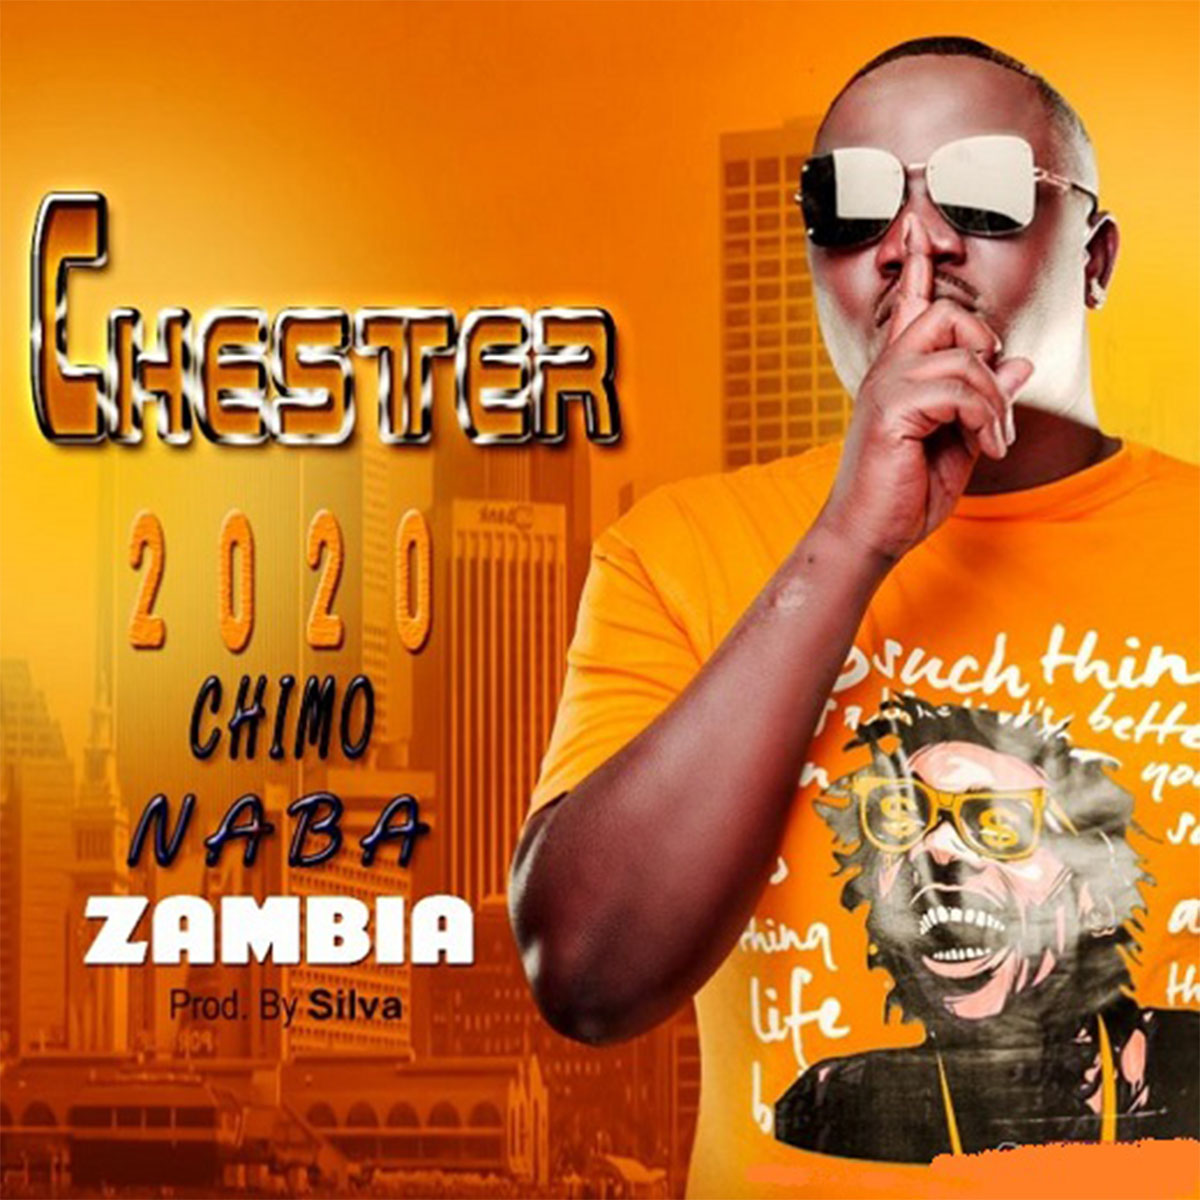 Chester - Chimo Naba Zambia